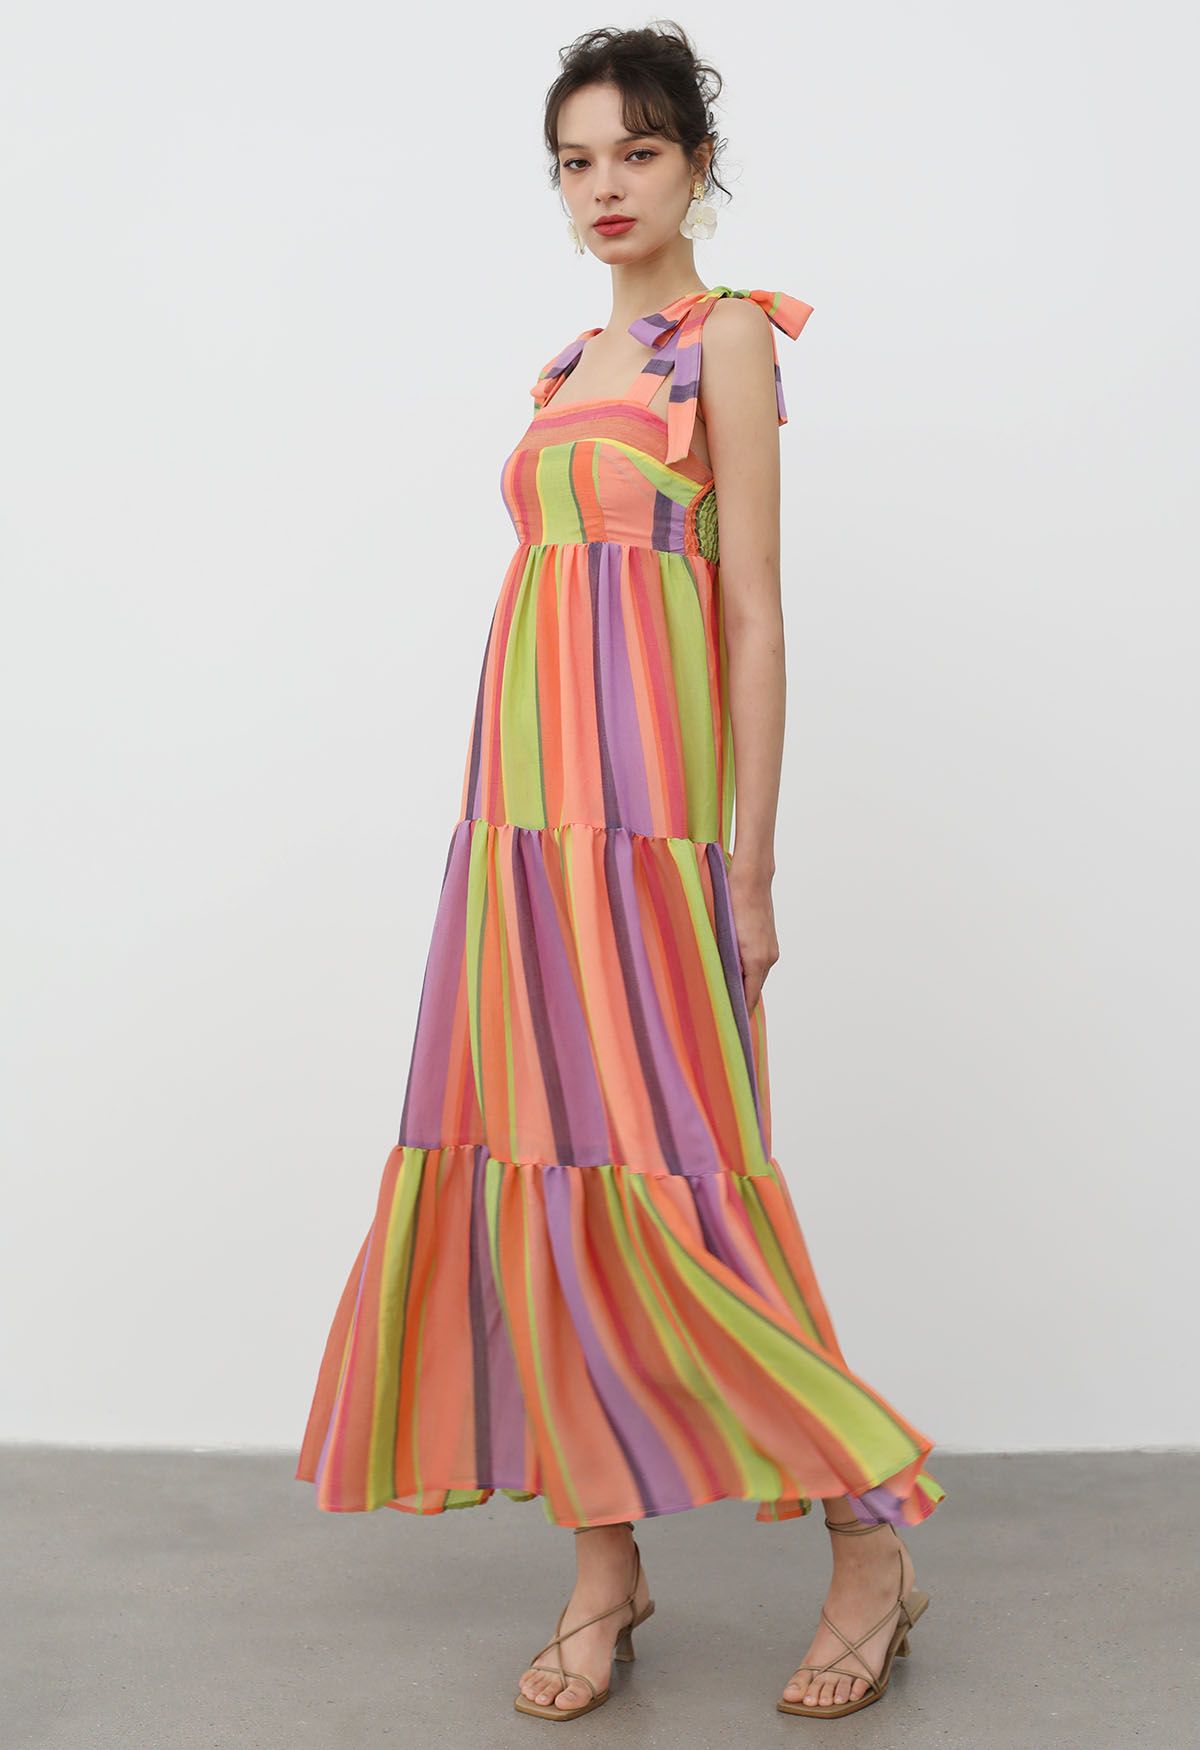 Summer Hues Rainbow Striped Tie-Strap Maxi Dress